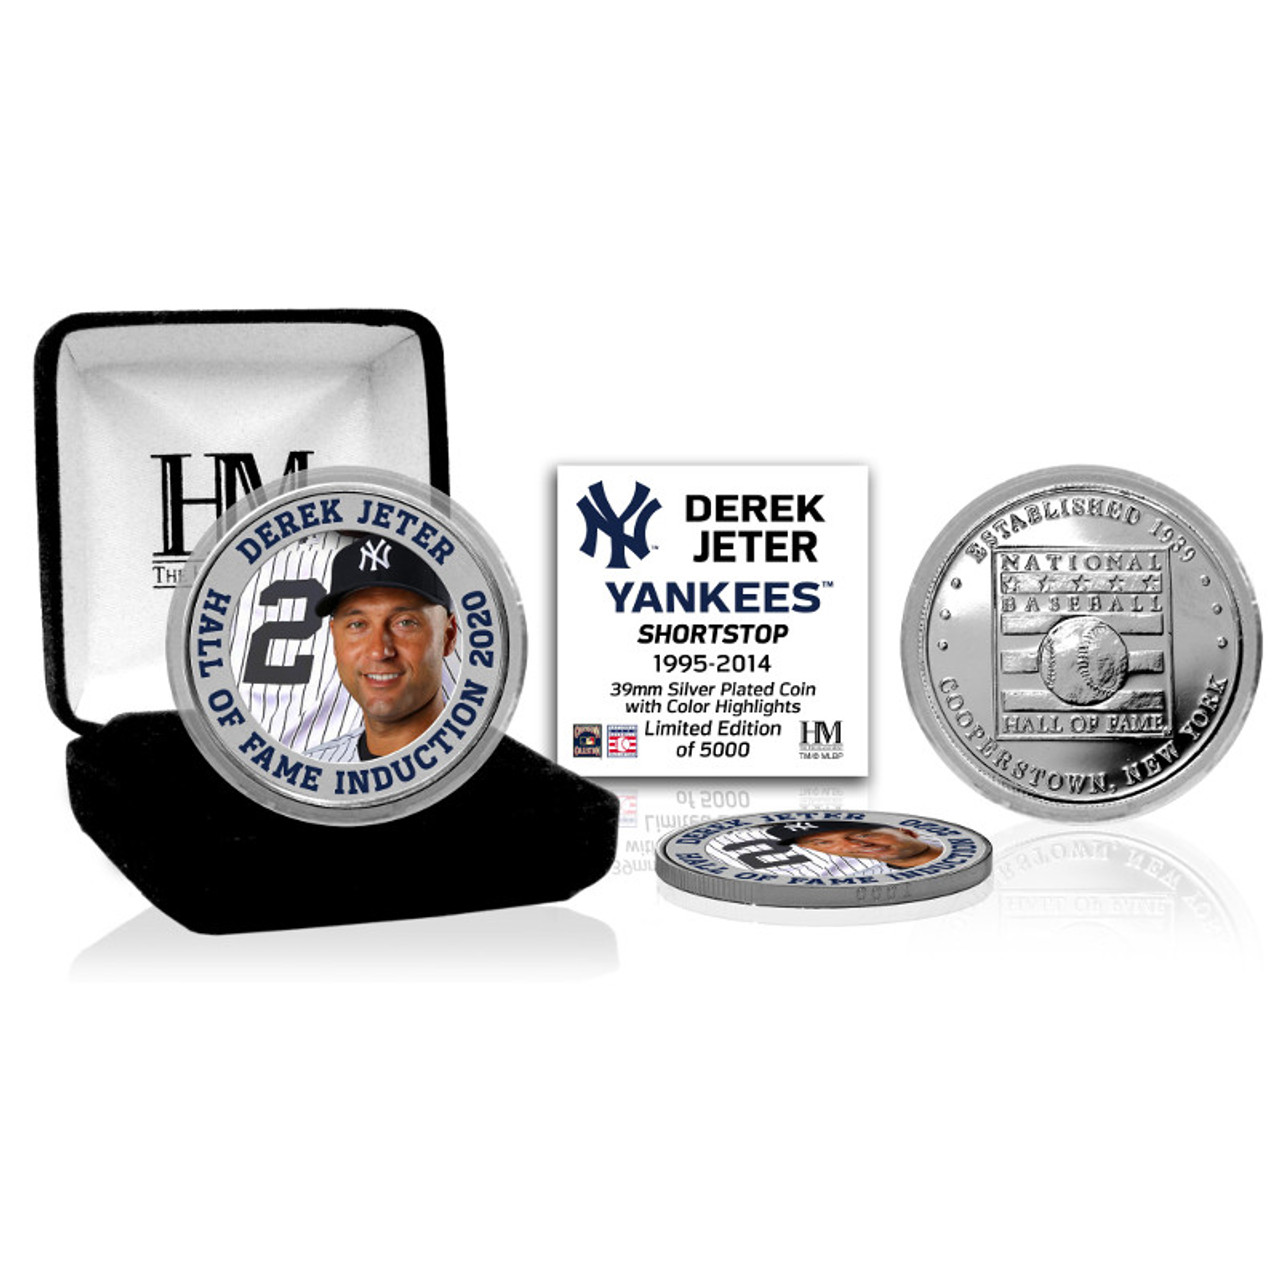 Derek Jeter Hall of Fame: New York Yankees career by the numbers